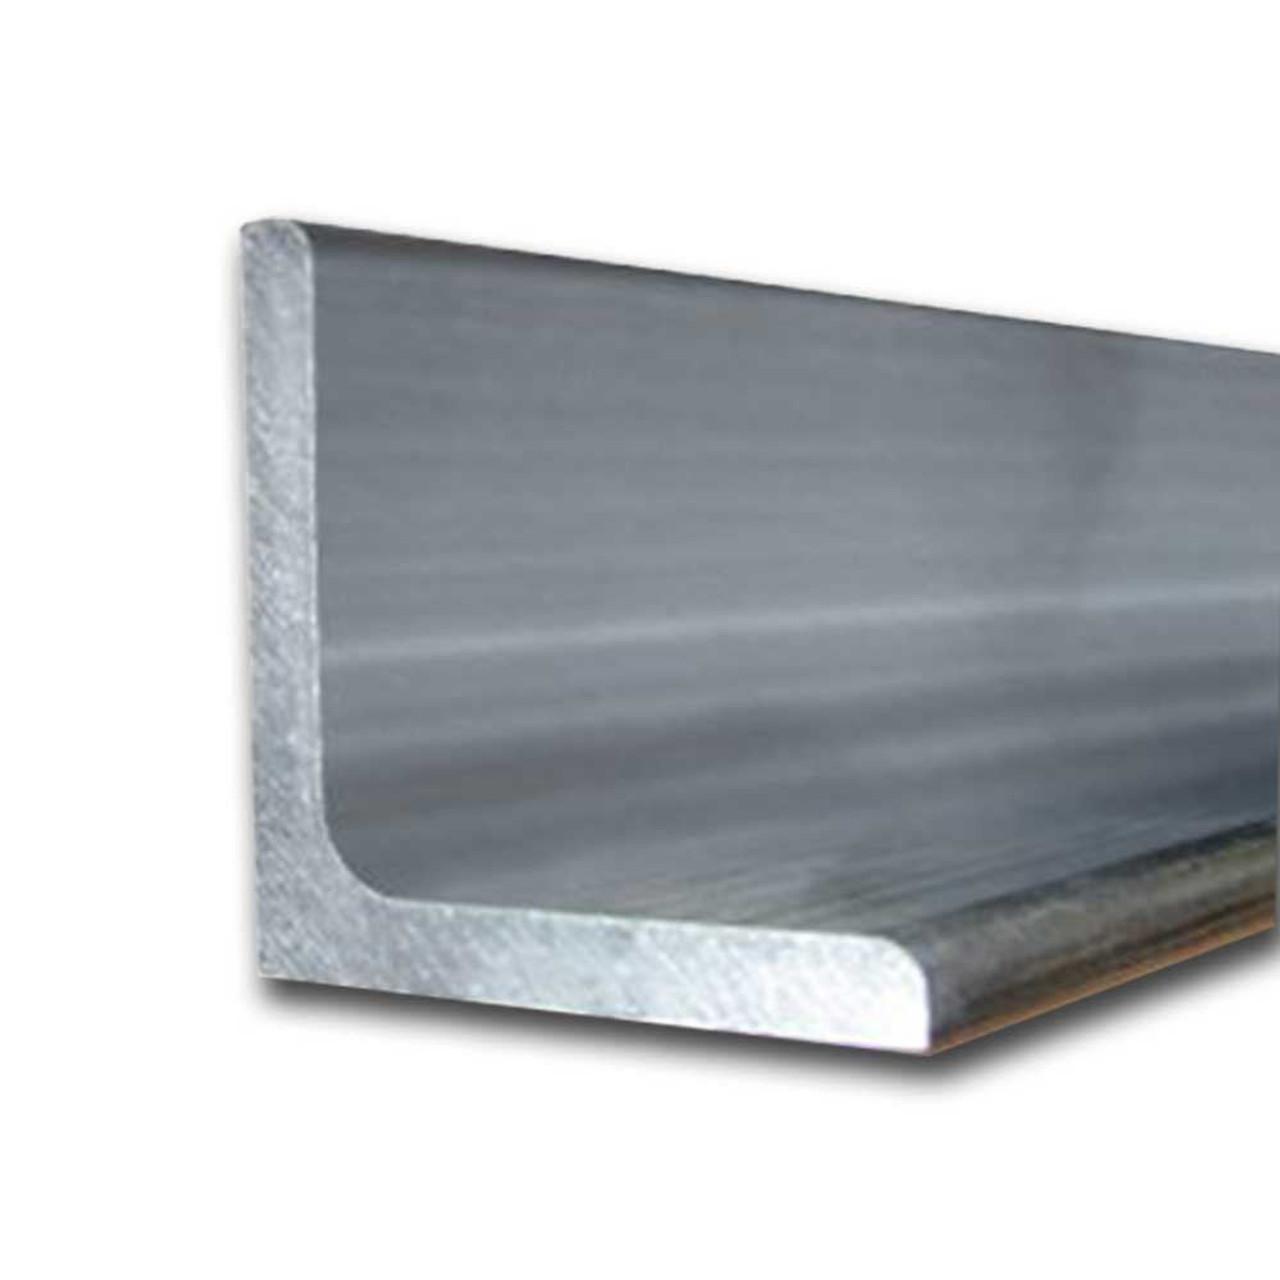 2" x 2" x 0.250" x 11 inches, 7075-T6 Aluminum Angle